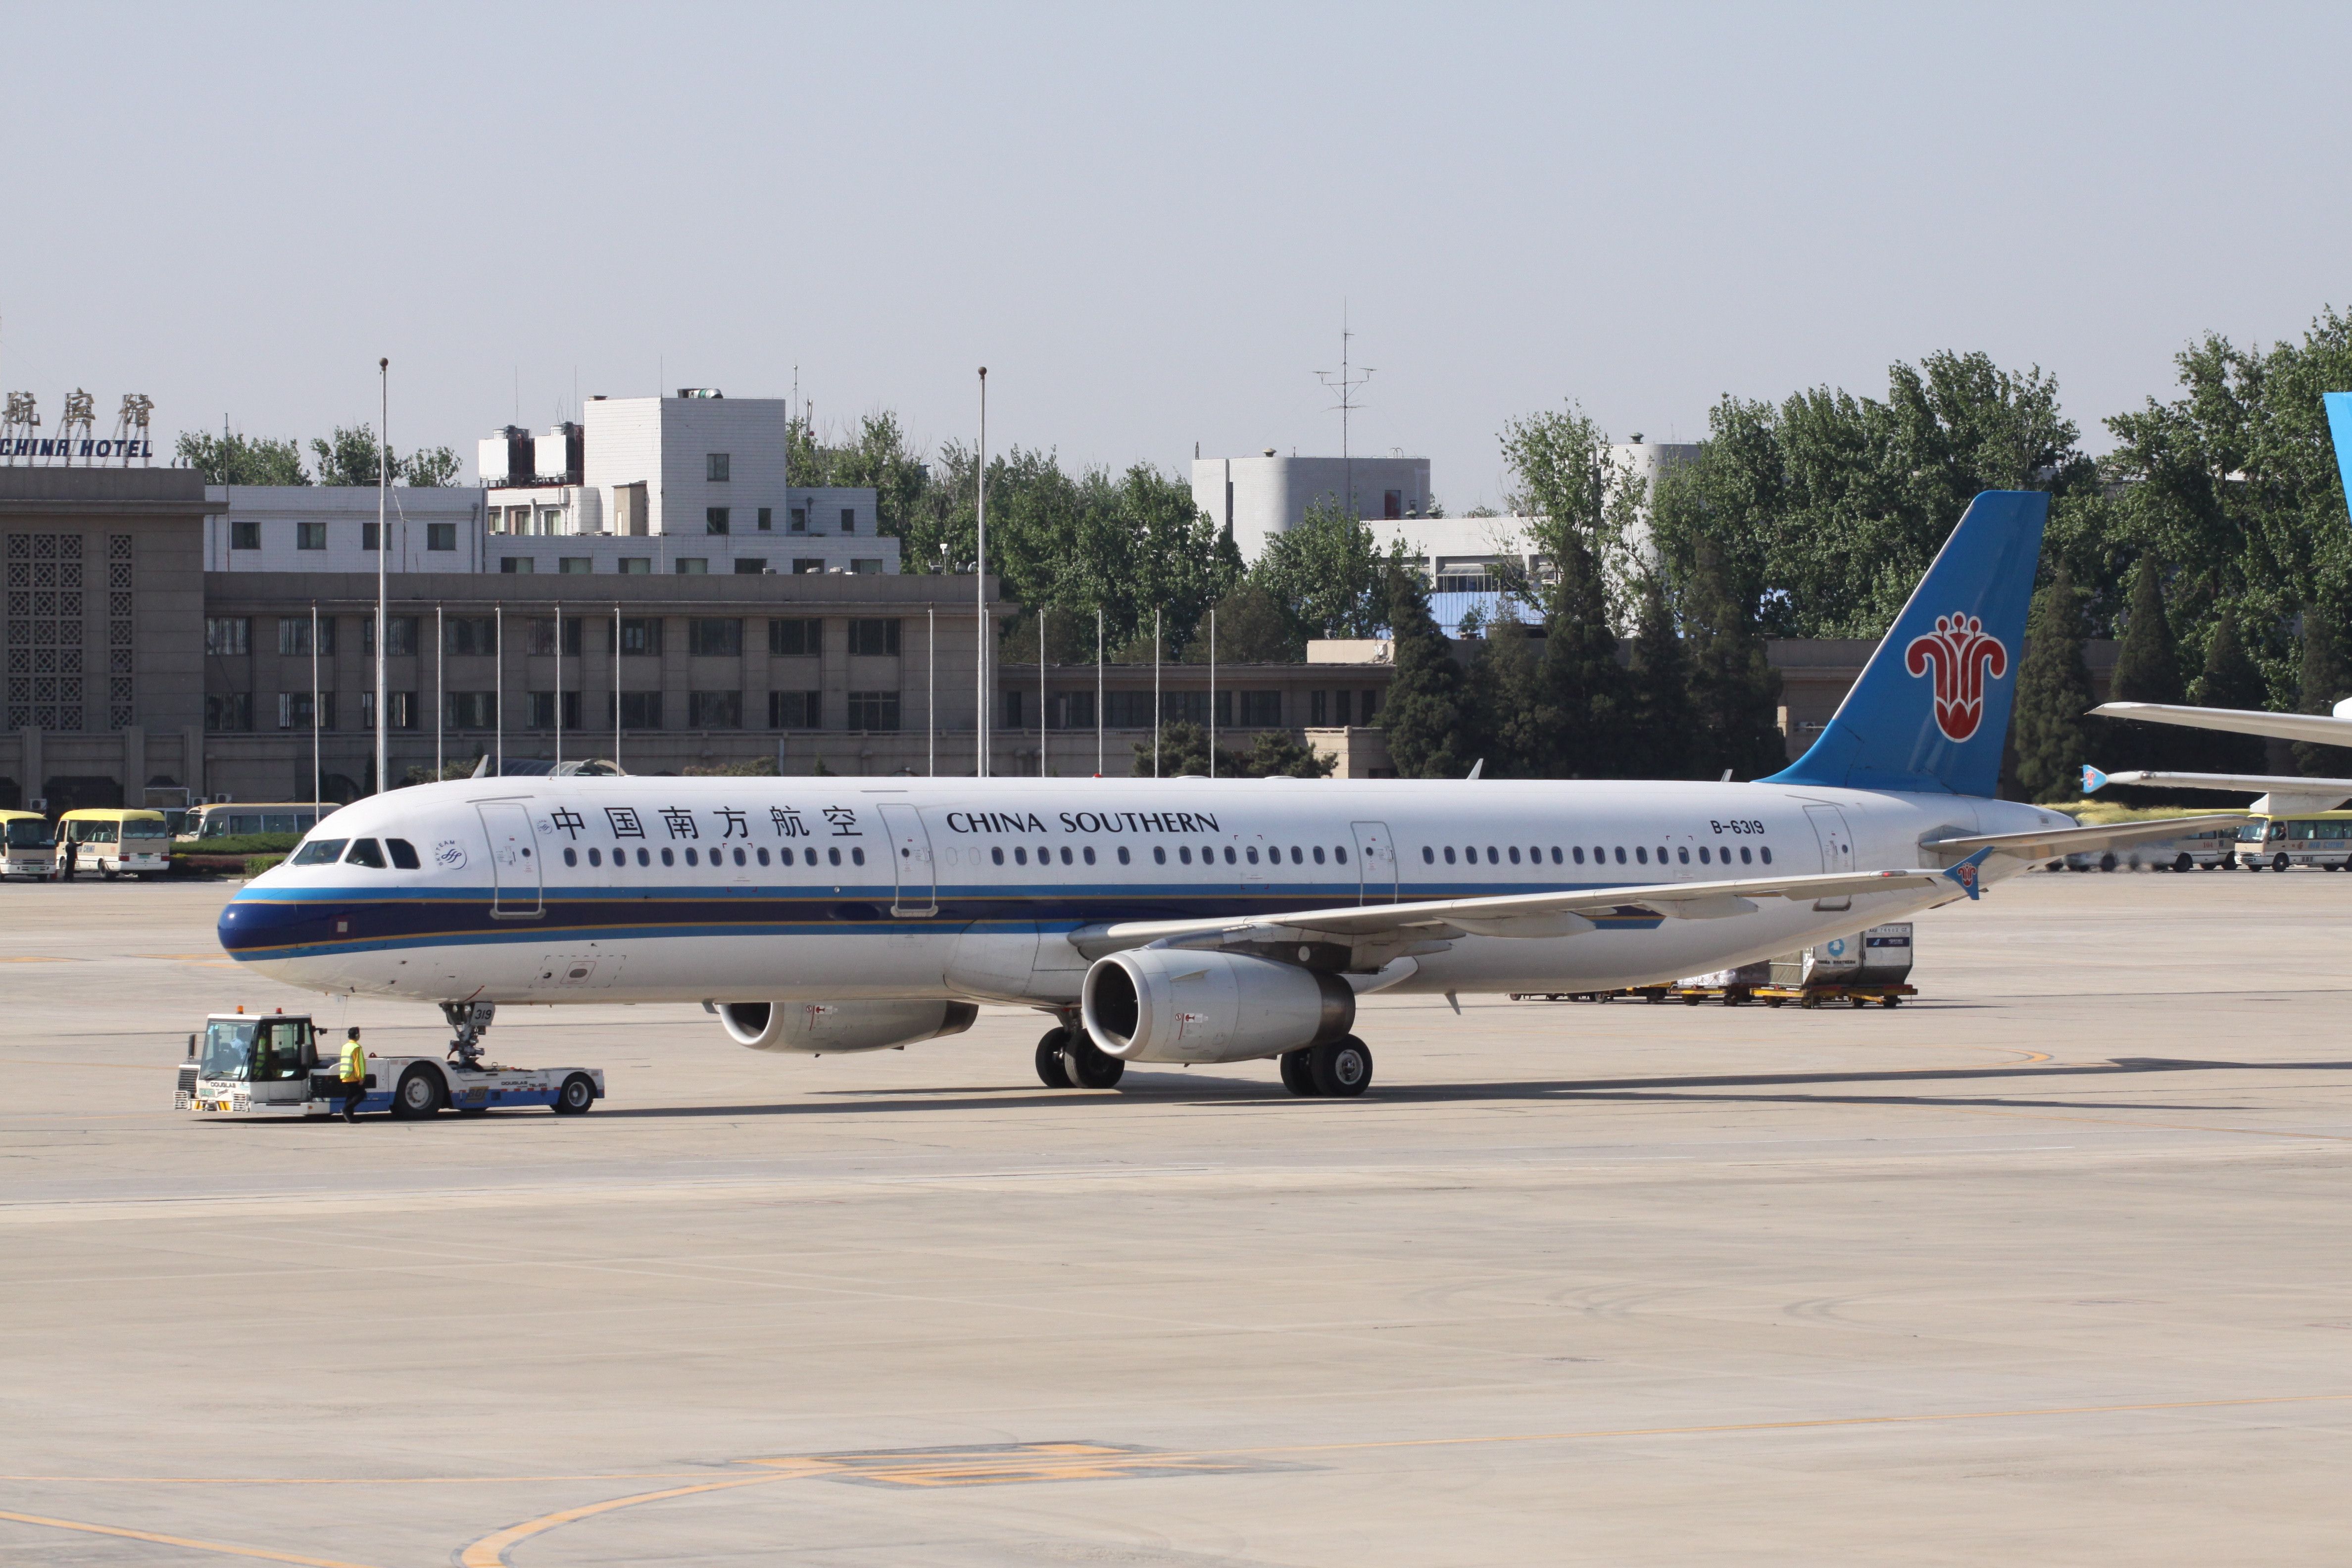 China Southern Airbus A321-200